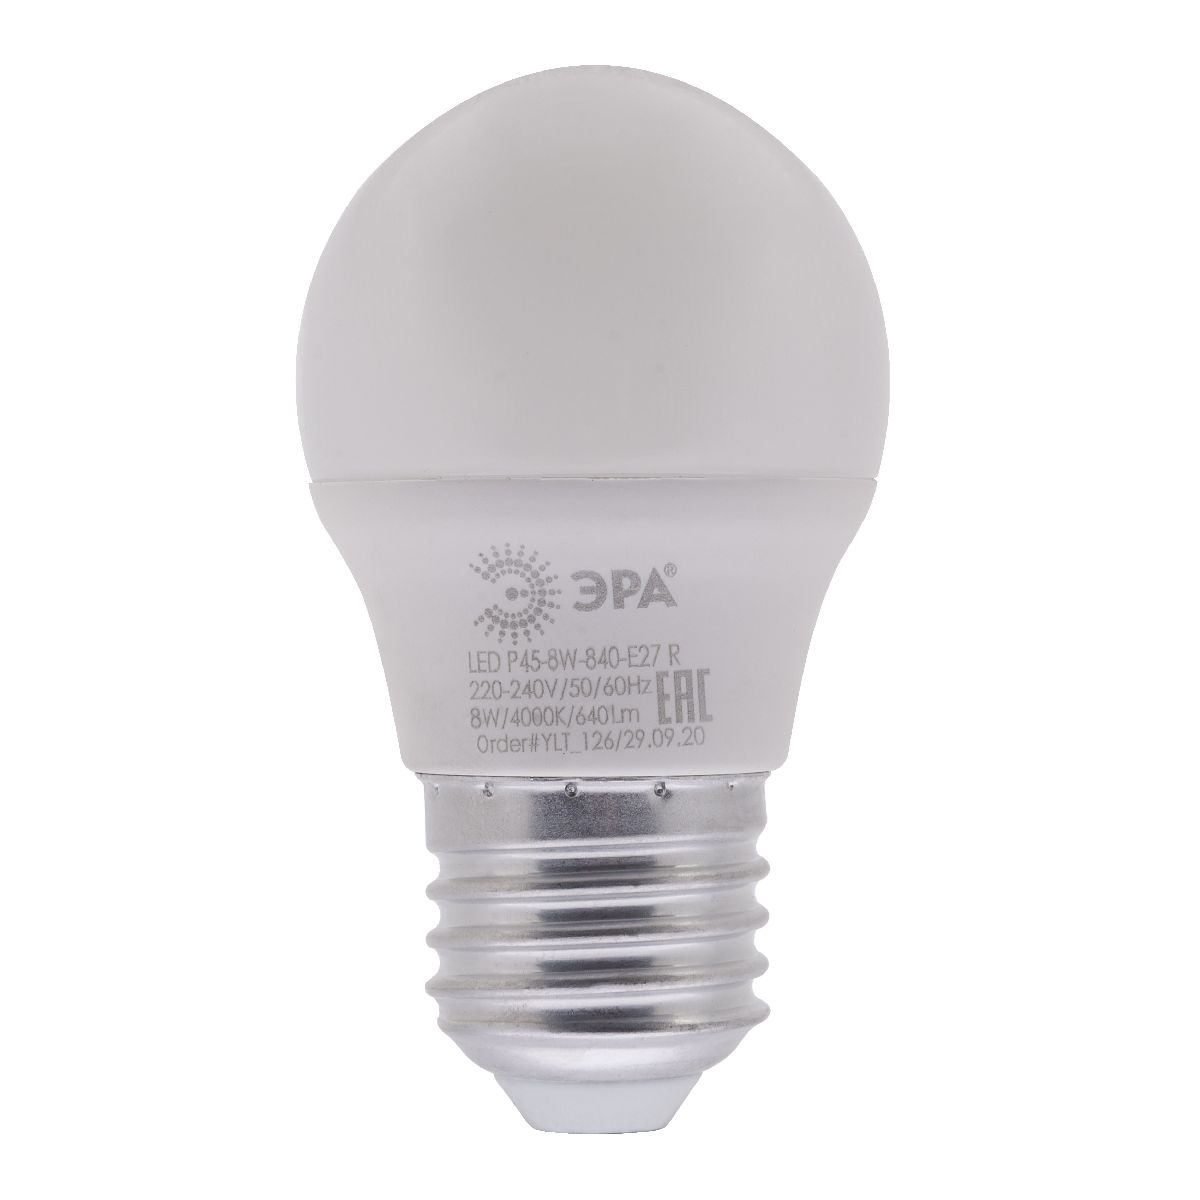 Лампа светодиодная Эра E27 8W 4000K LED P45-8W-840-E27 R Б0049645